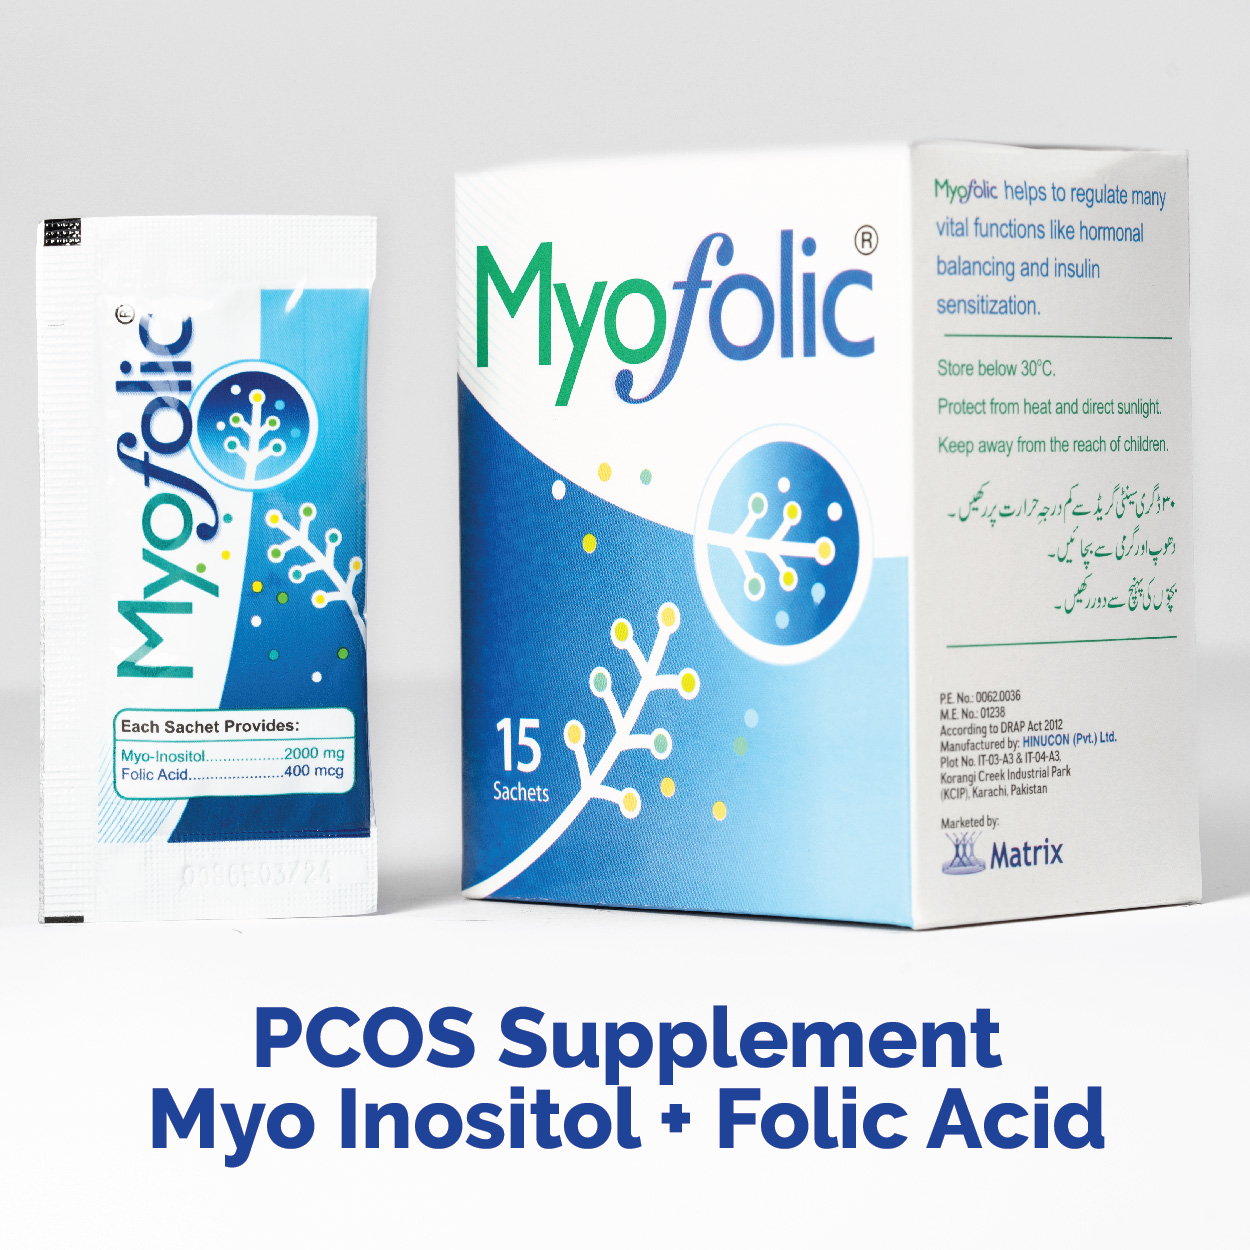 PCOS Supplement